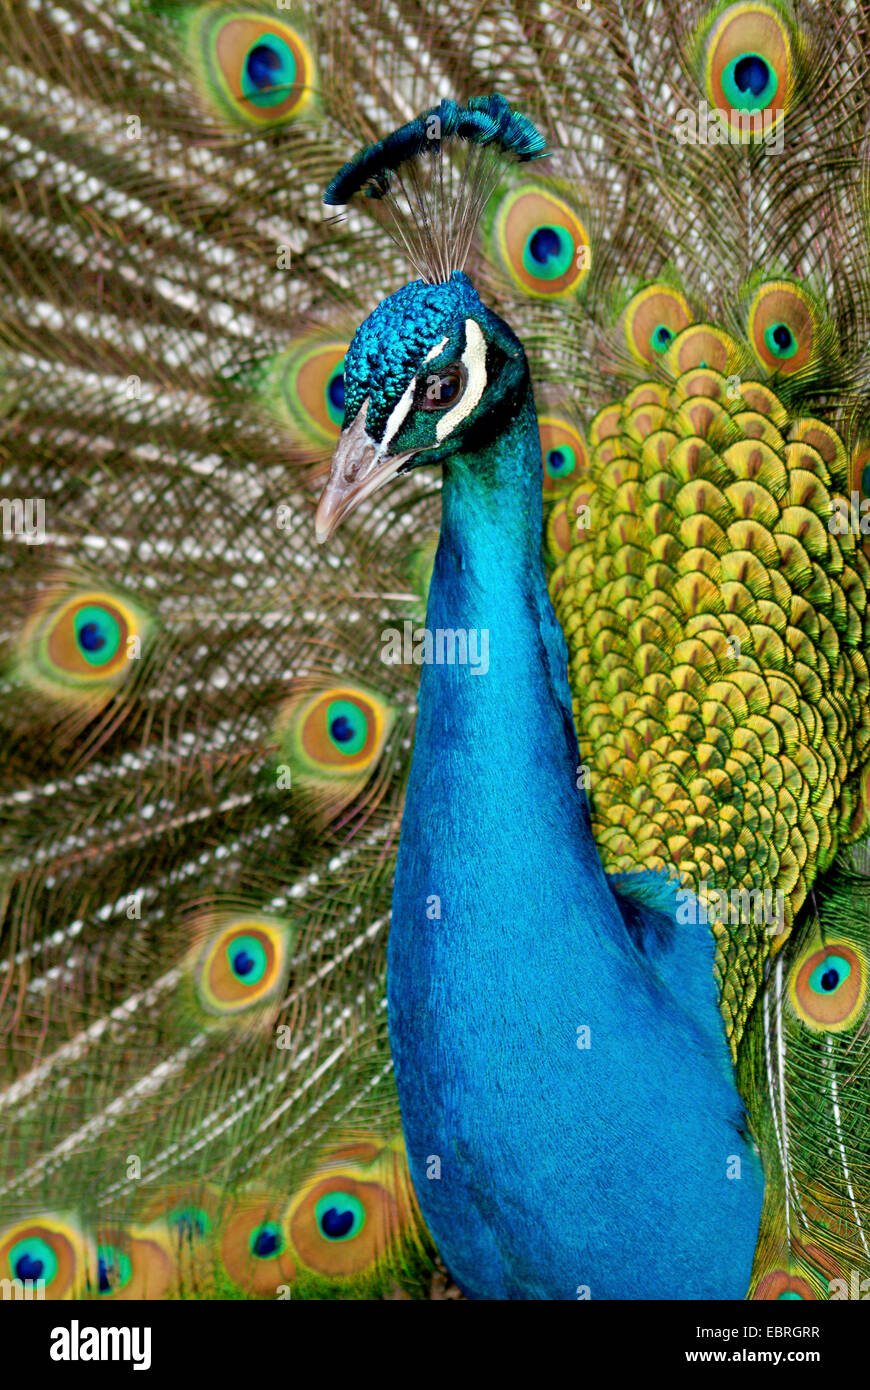 common peafowl, Indian peafowl, blue peafowl (Pavo cristatus), portrait of a displaying cock Stock Photo